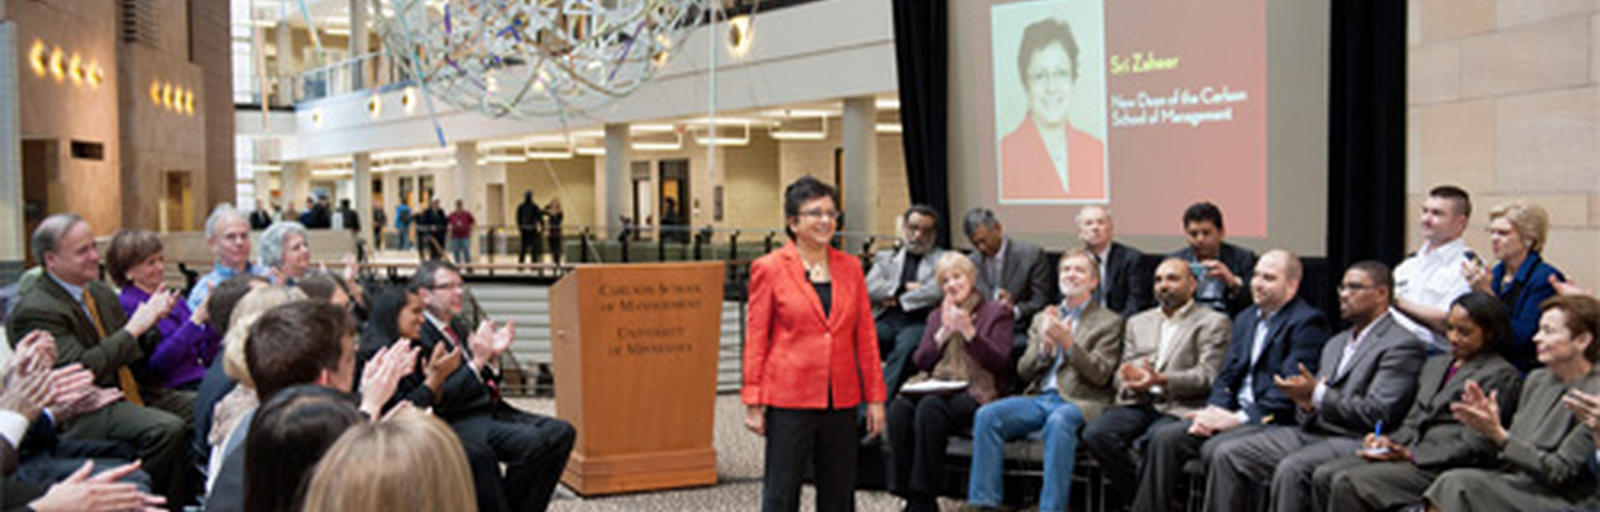 Sri Zaheer named dean of University of Minnesota's Carlson School of Management